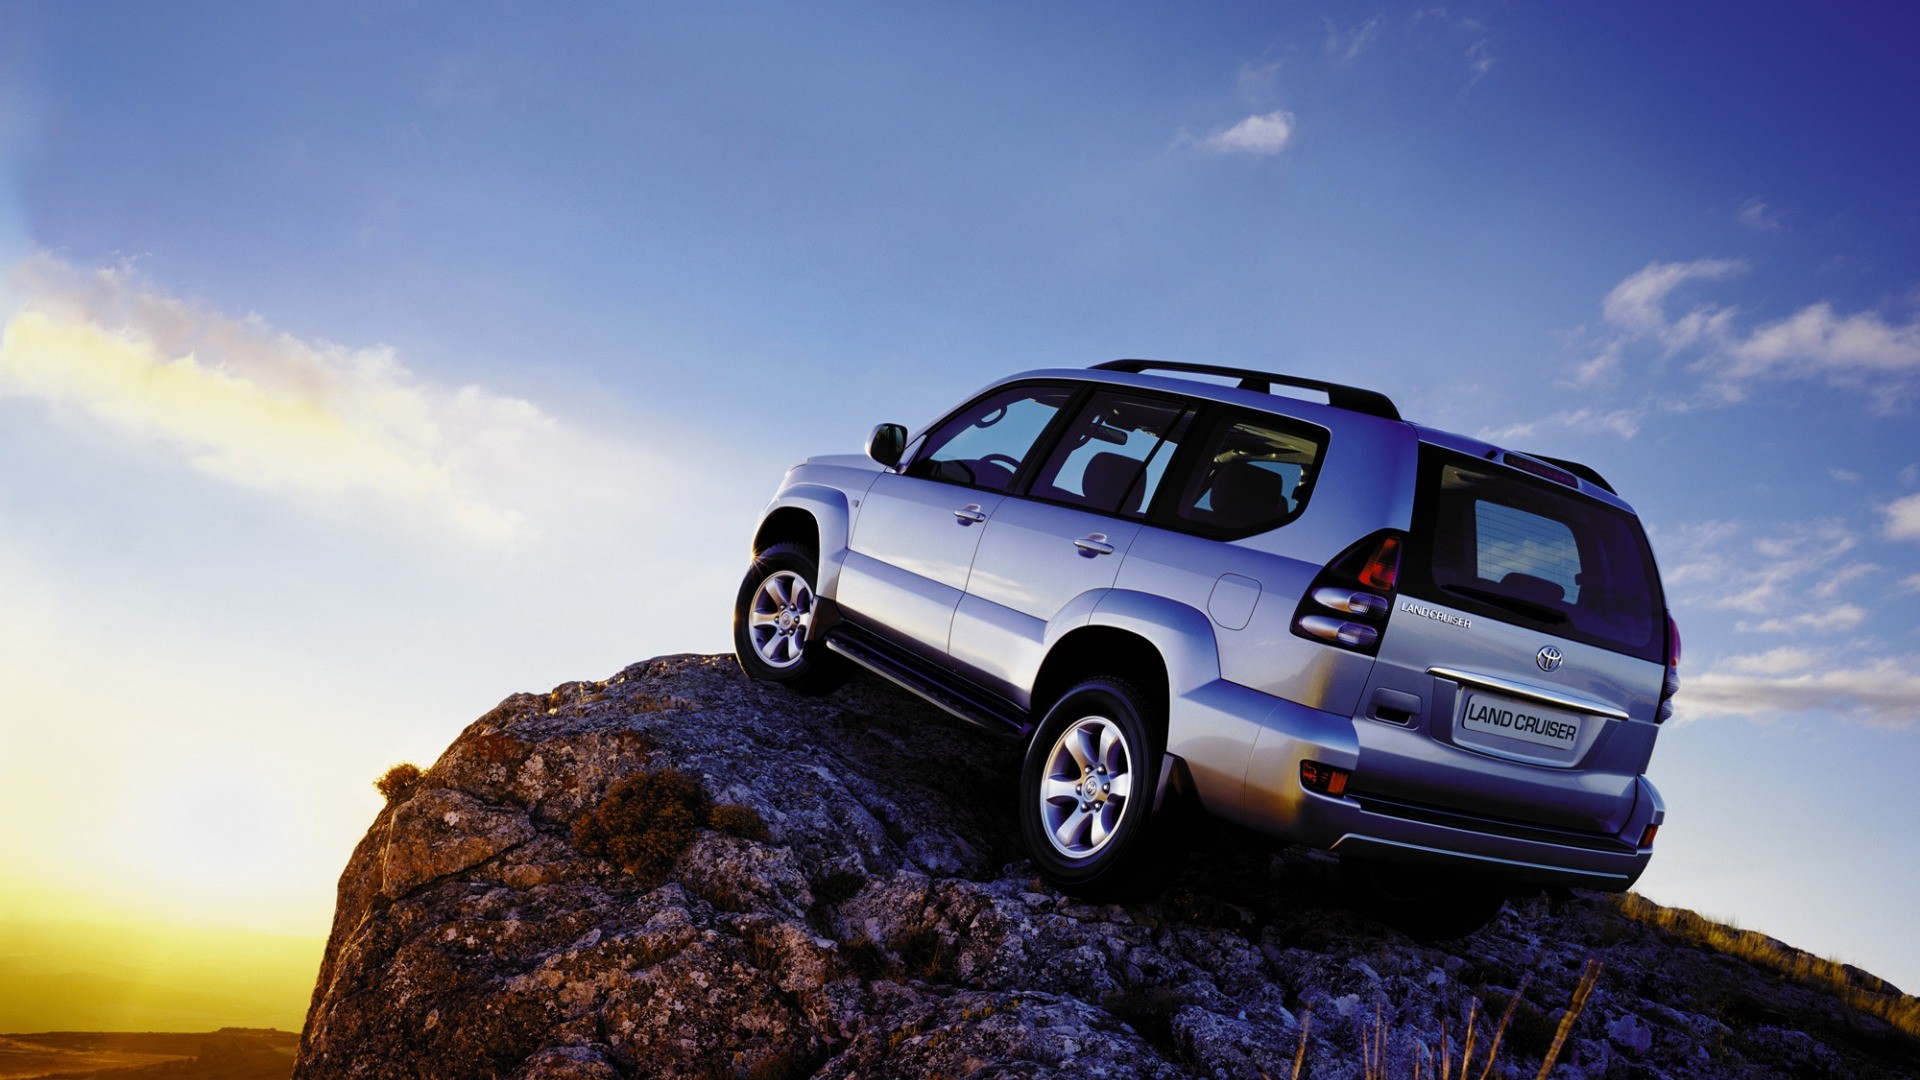 Toyota  Land Cruiser  Prado  Mountain  Jeep Wallpapers Hd